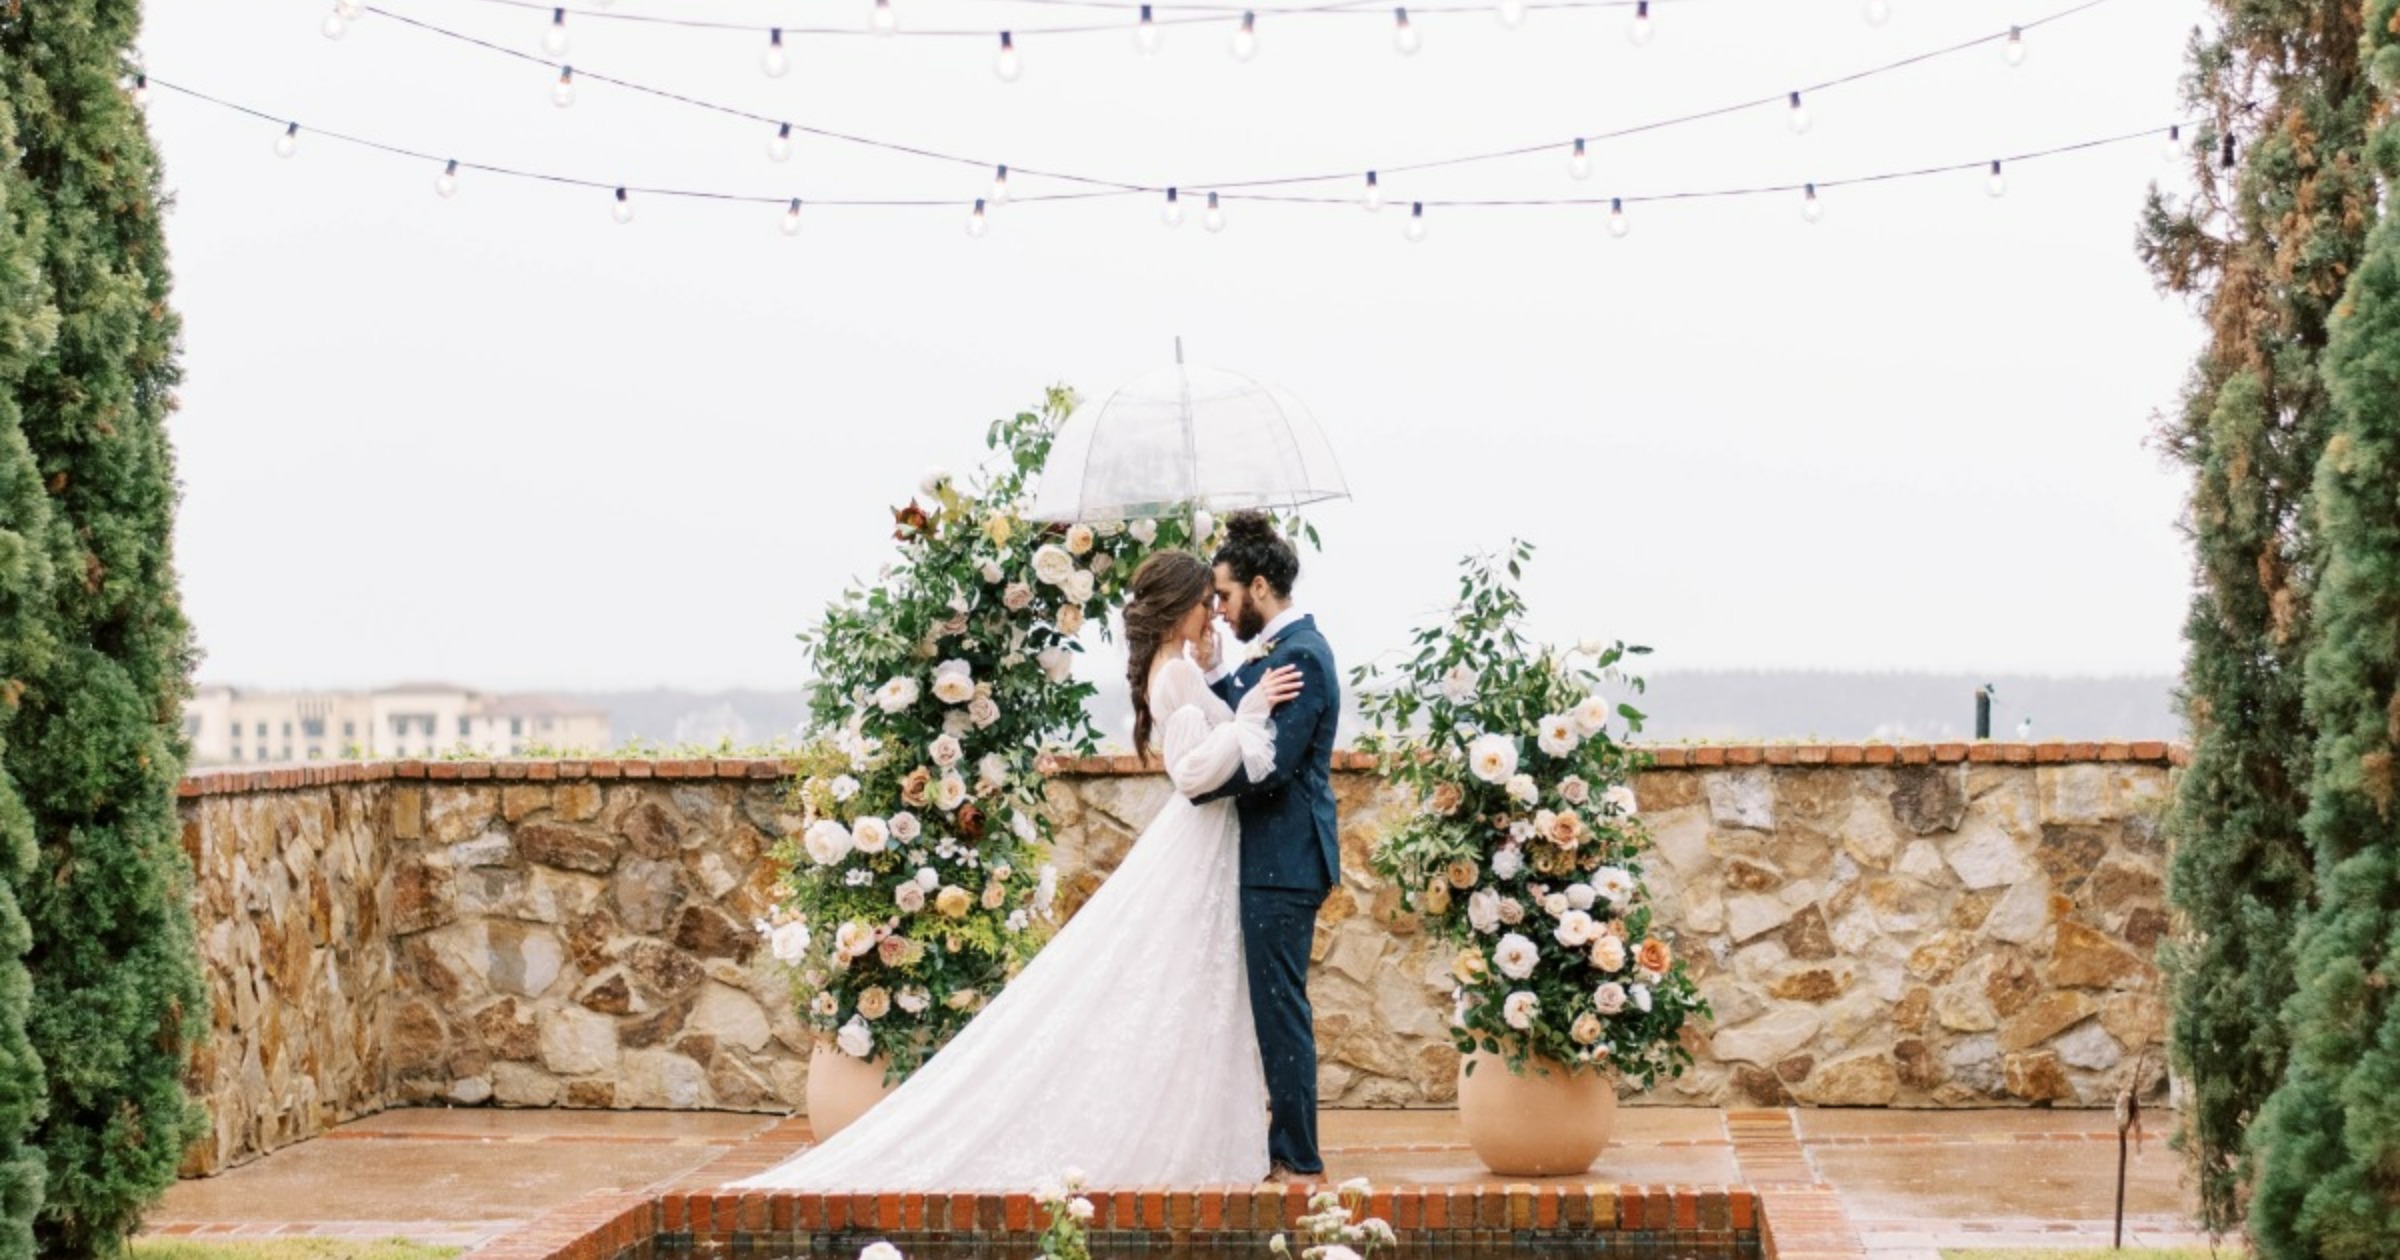 Intimate Wedding Celebration with Romantic Italian Inspired Details